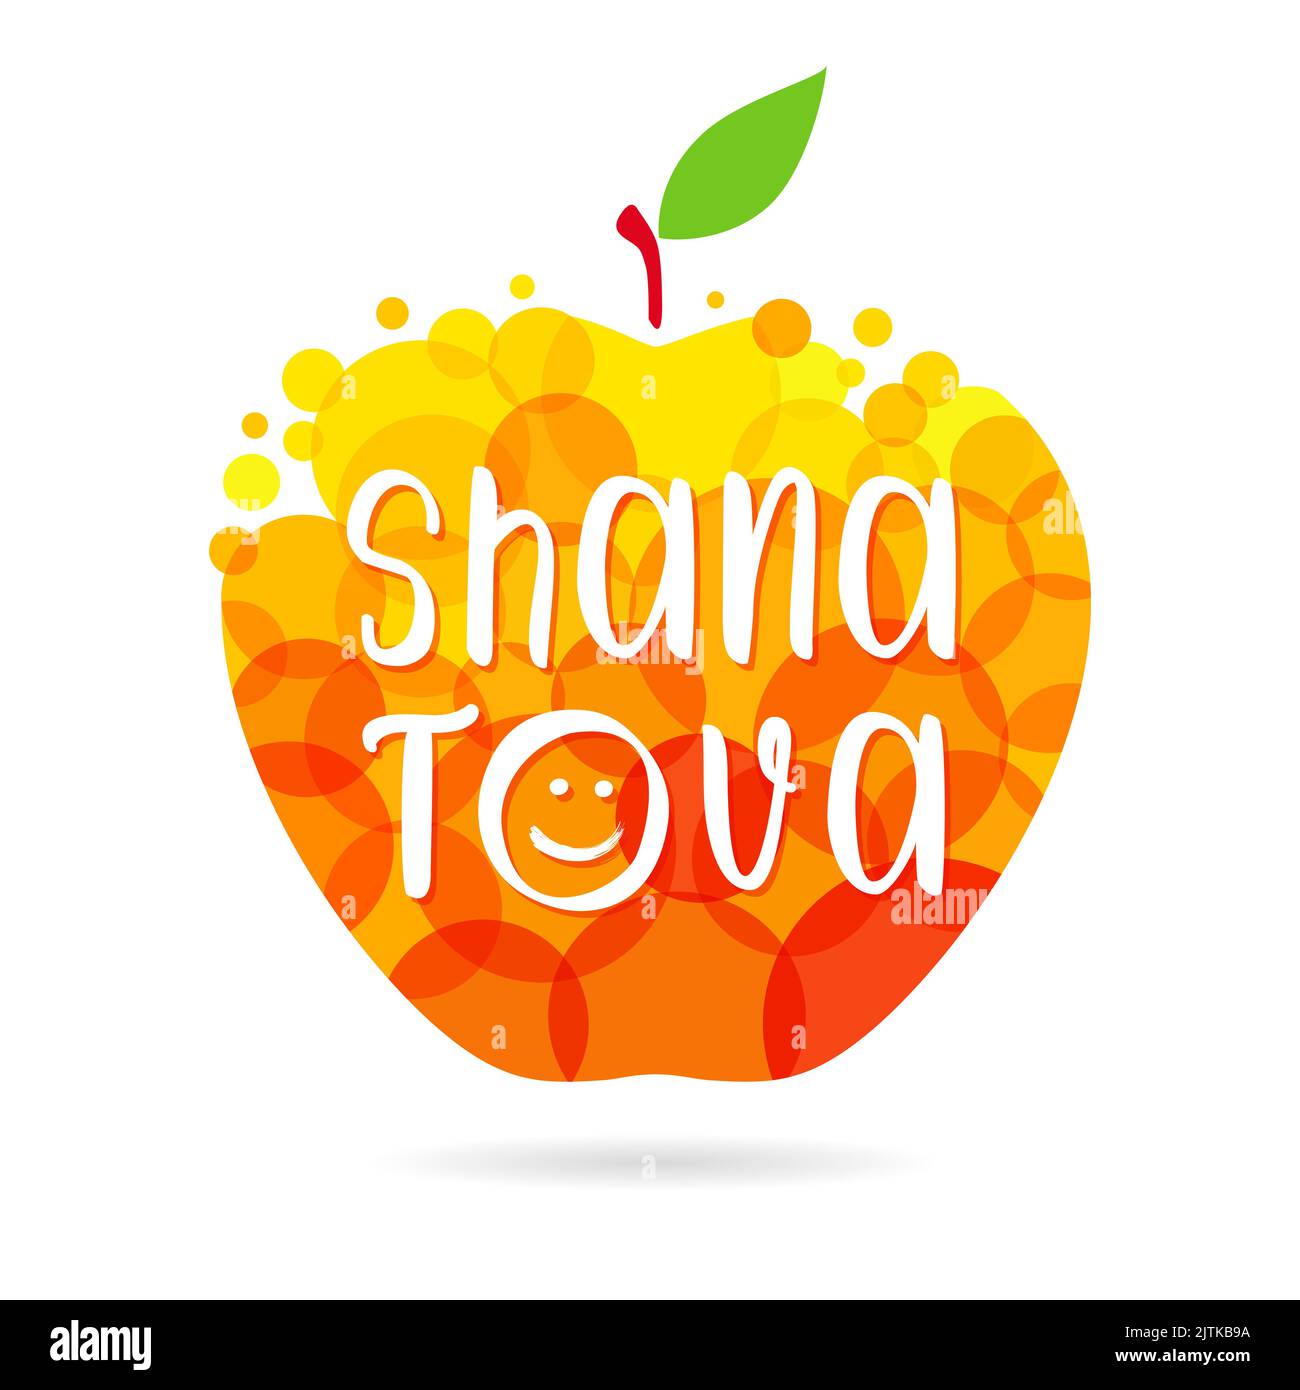 Rosh hashana card - Jewish New Year. Greeting text Shana tova transliteration means Have a sweet year. Creative apple vector illustration. Isolated ab Stock Vector